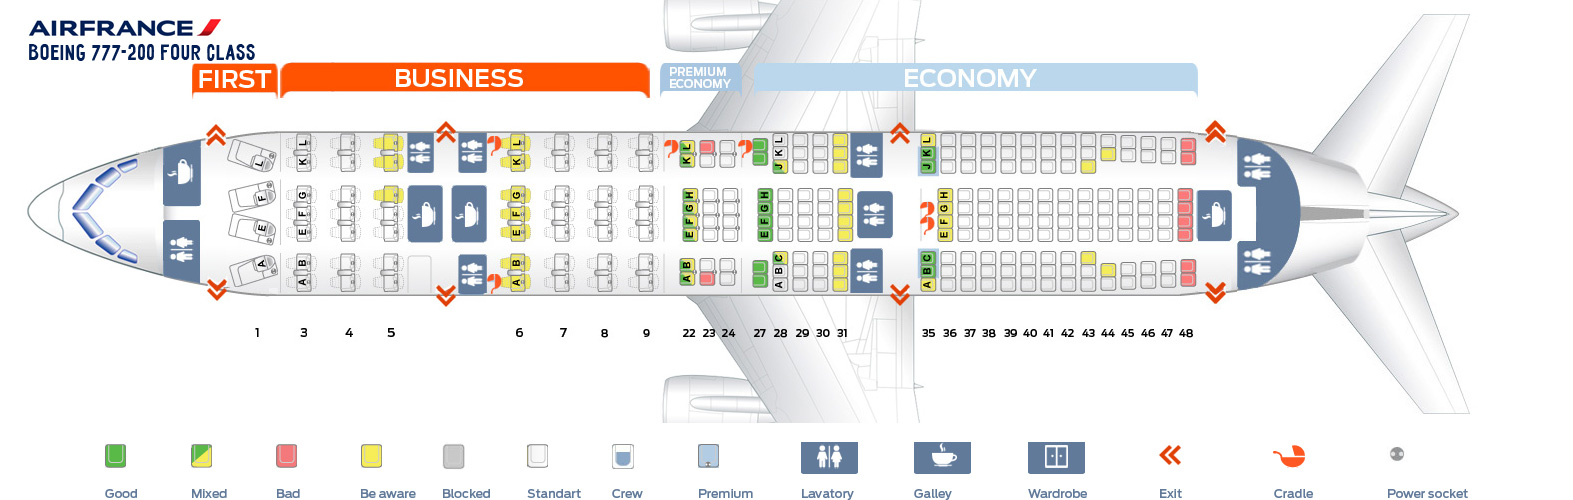 Air France Seating Chart